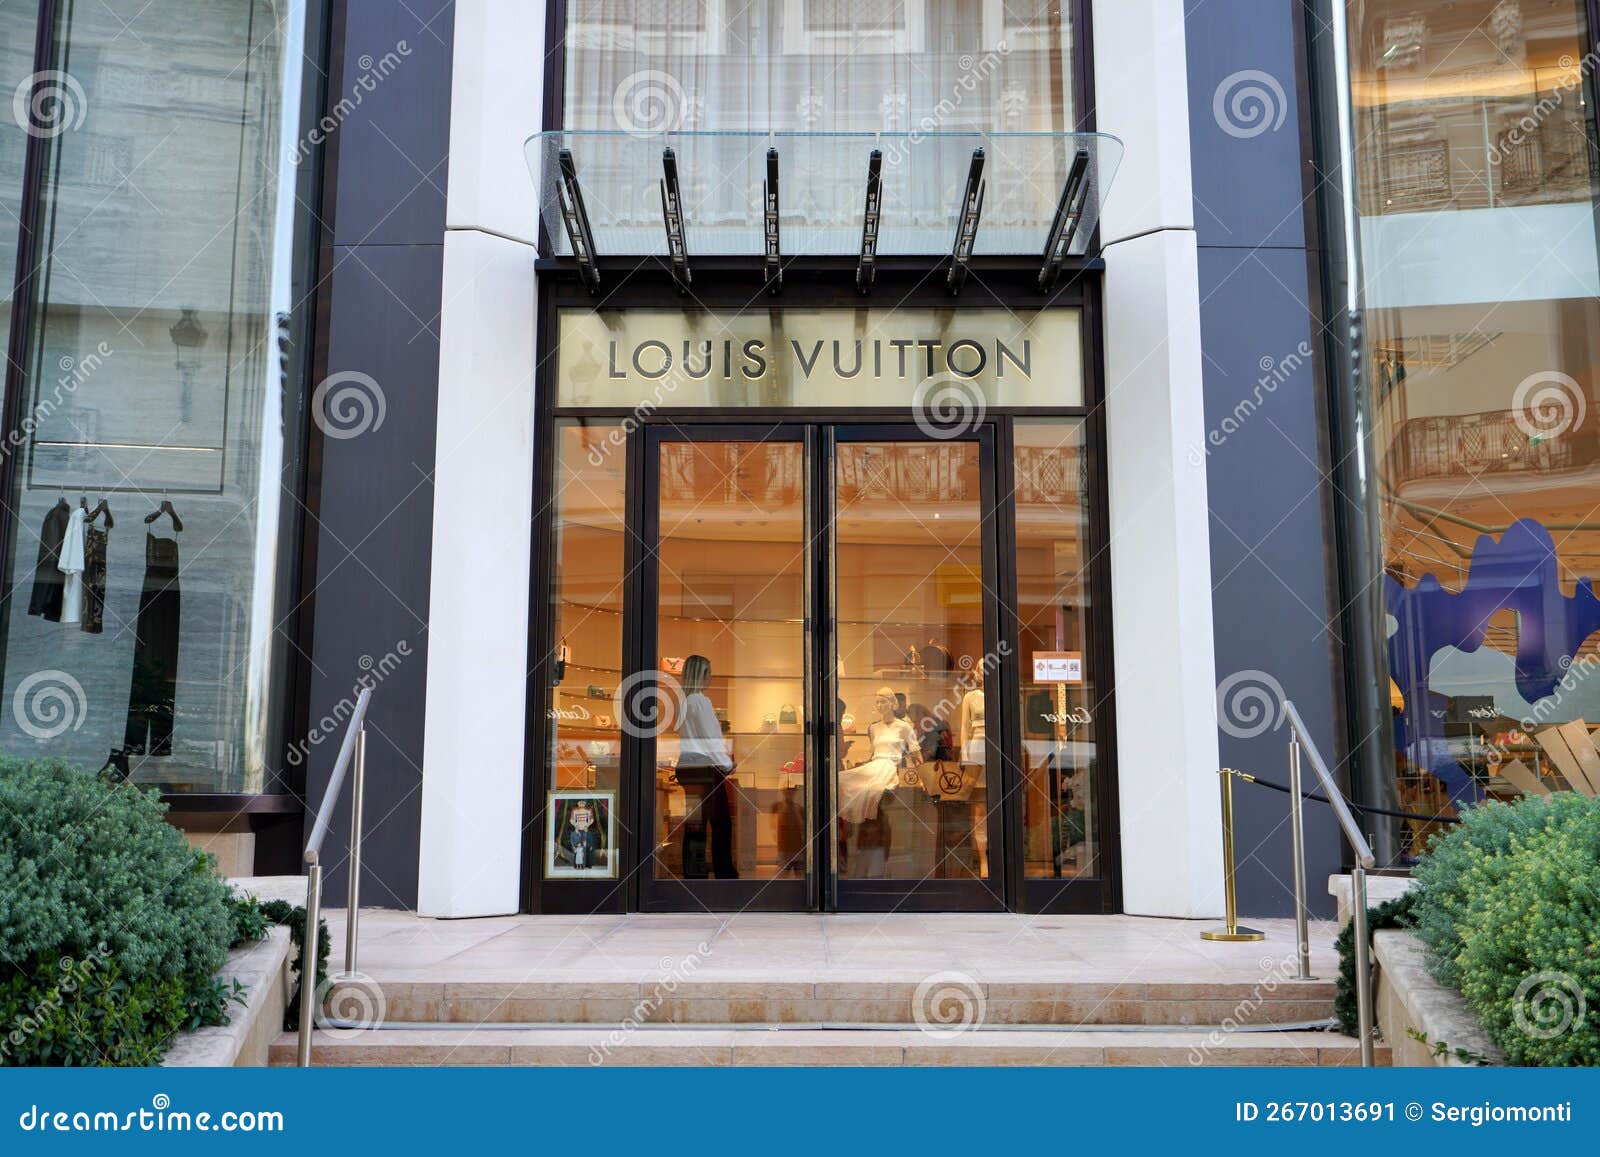 MONTE CARLO, MONACO - JUNE 18, 2022: Facade of Louis Vuitton Store